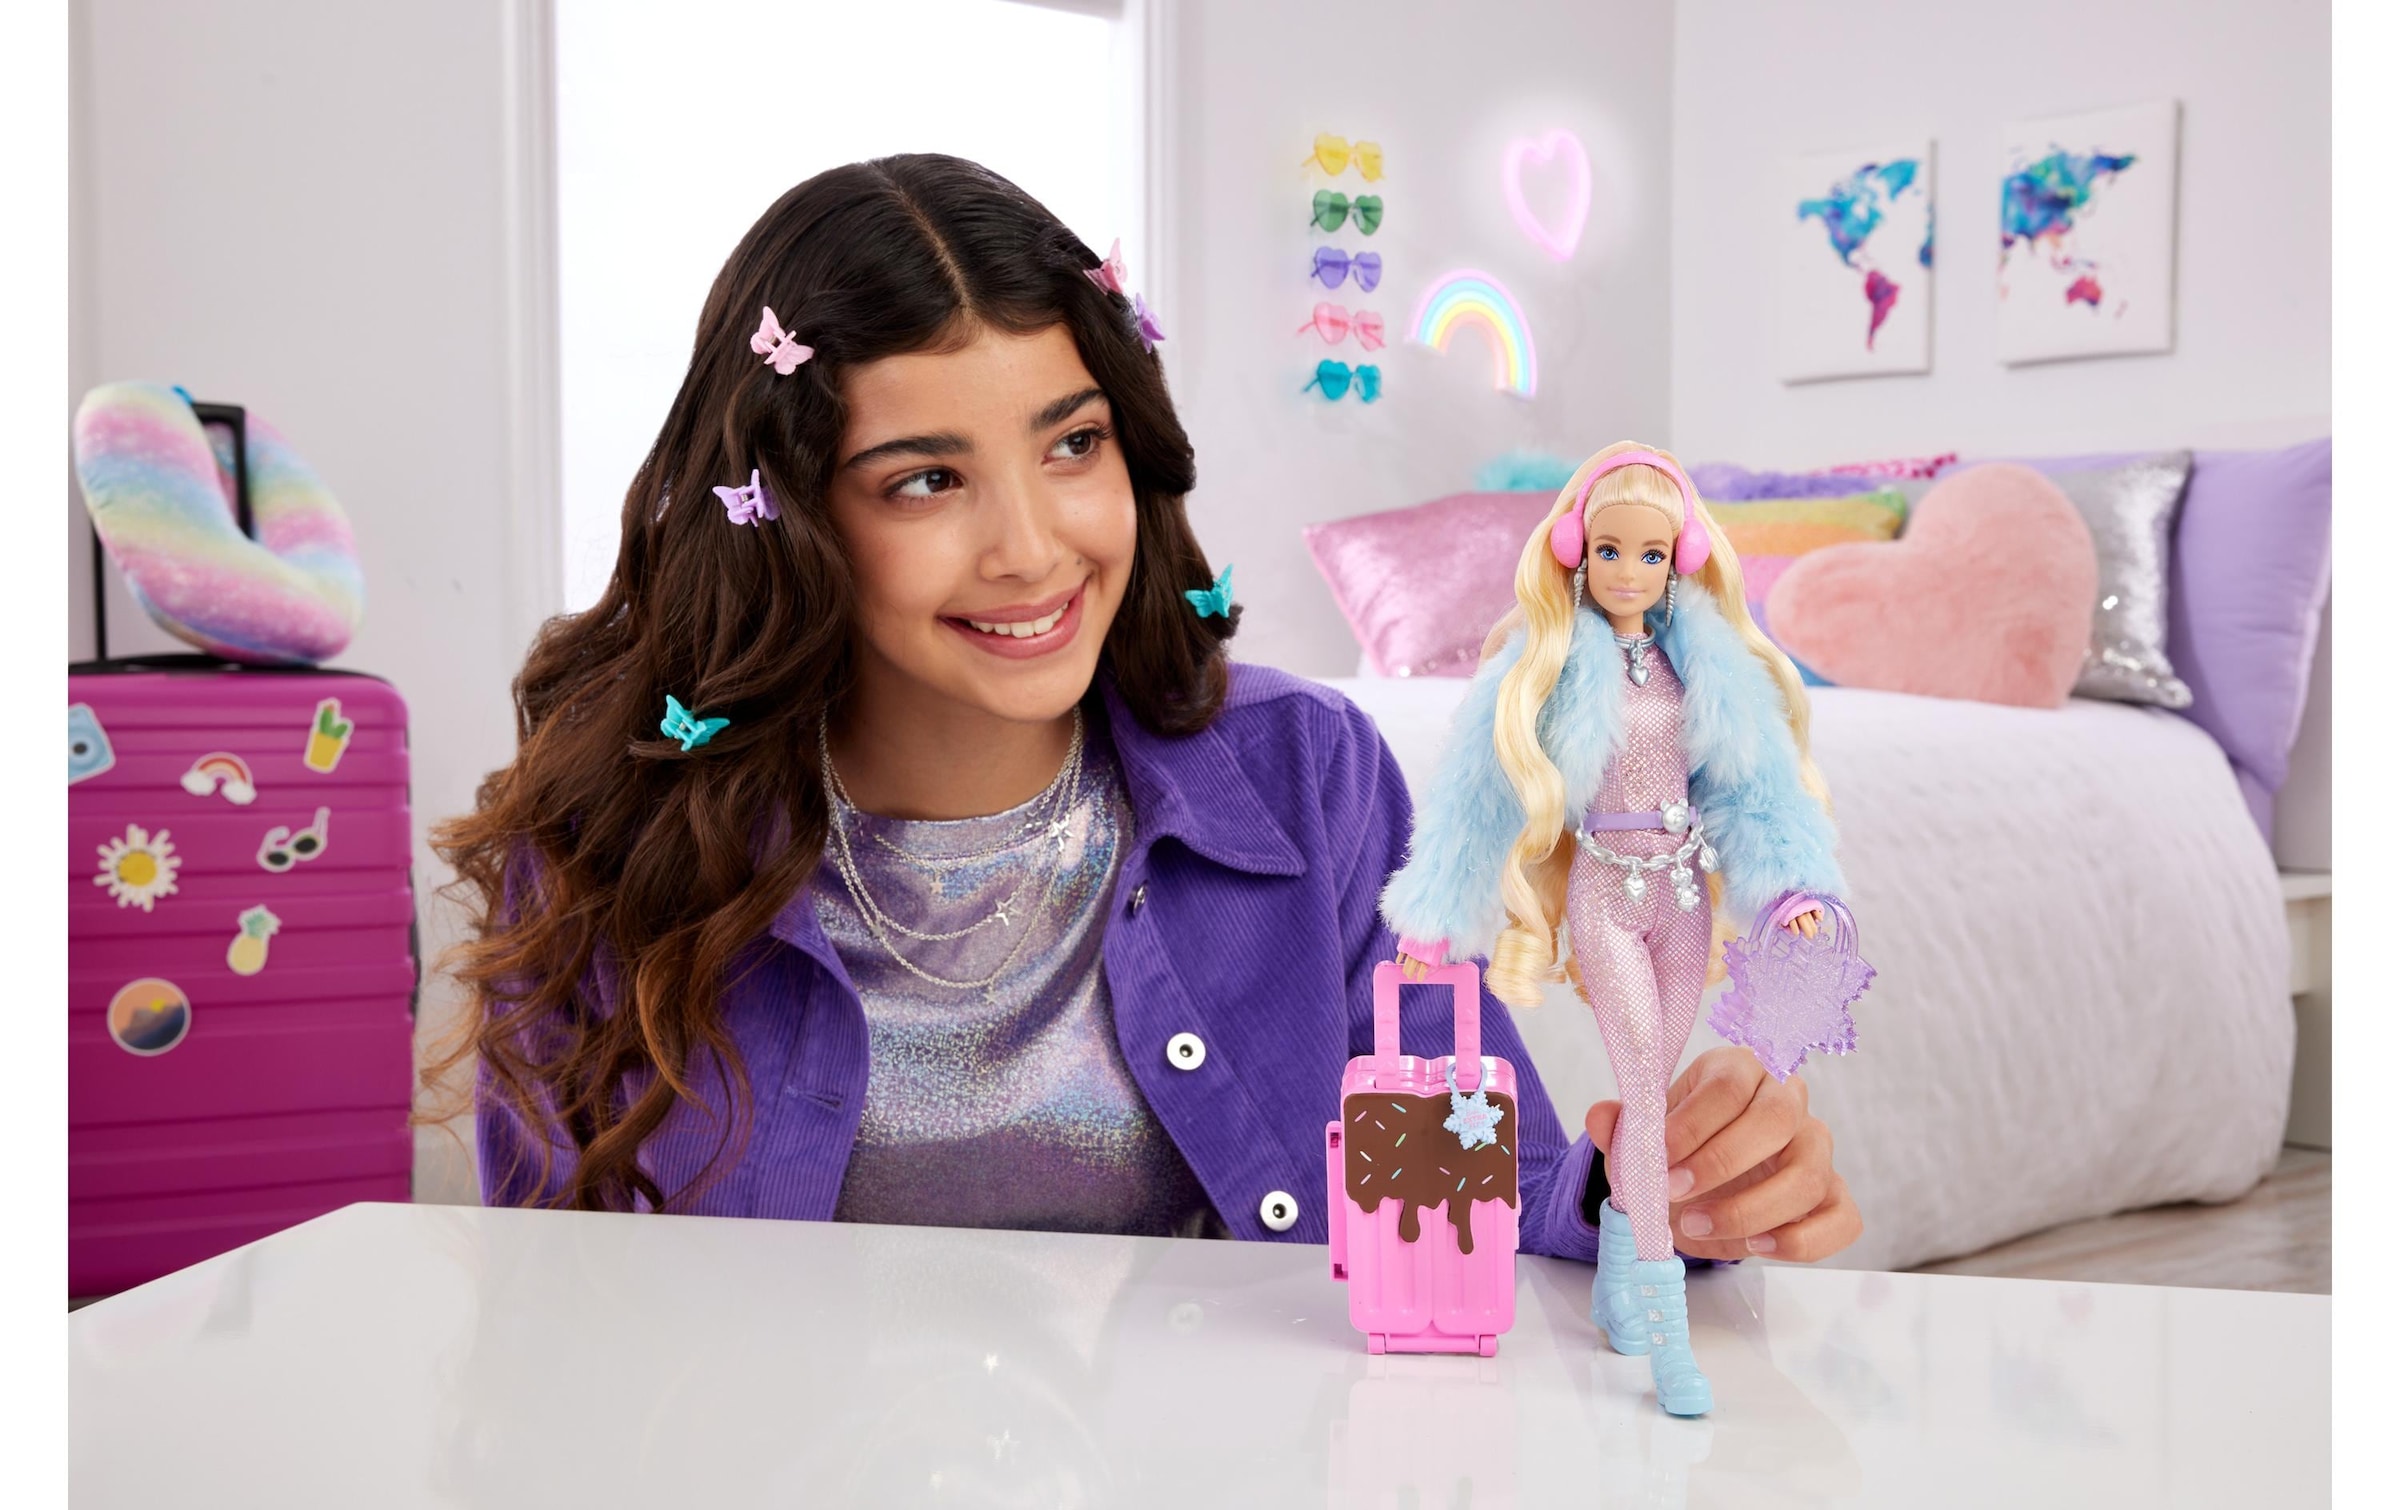 Barbie Anziehpuppe »Extra Fly Barbie-Pu«